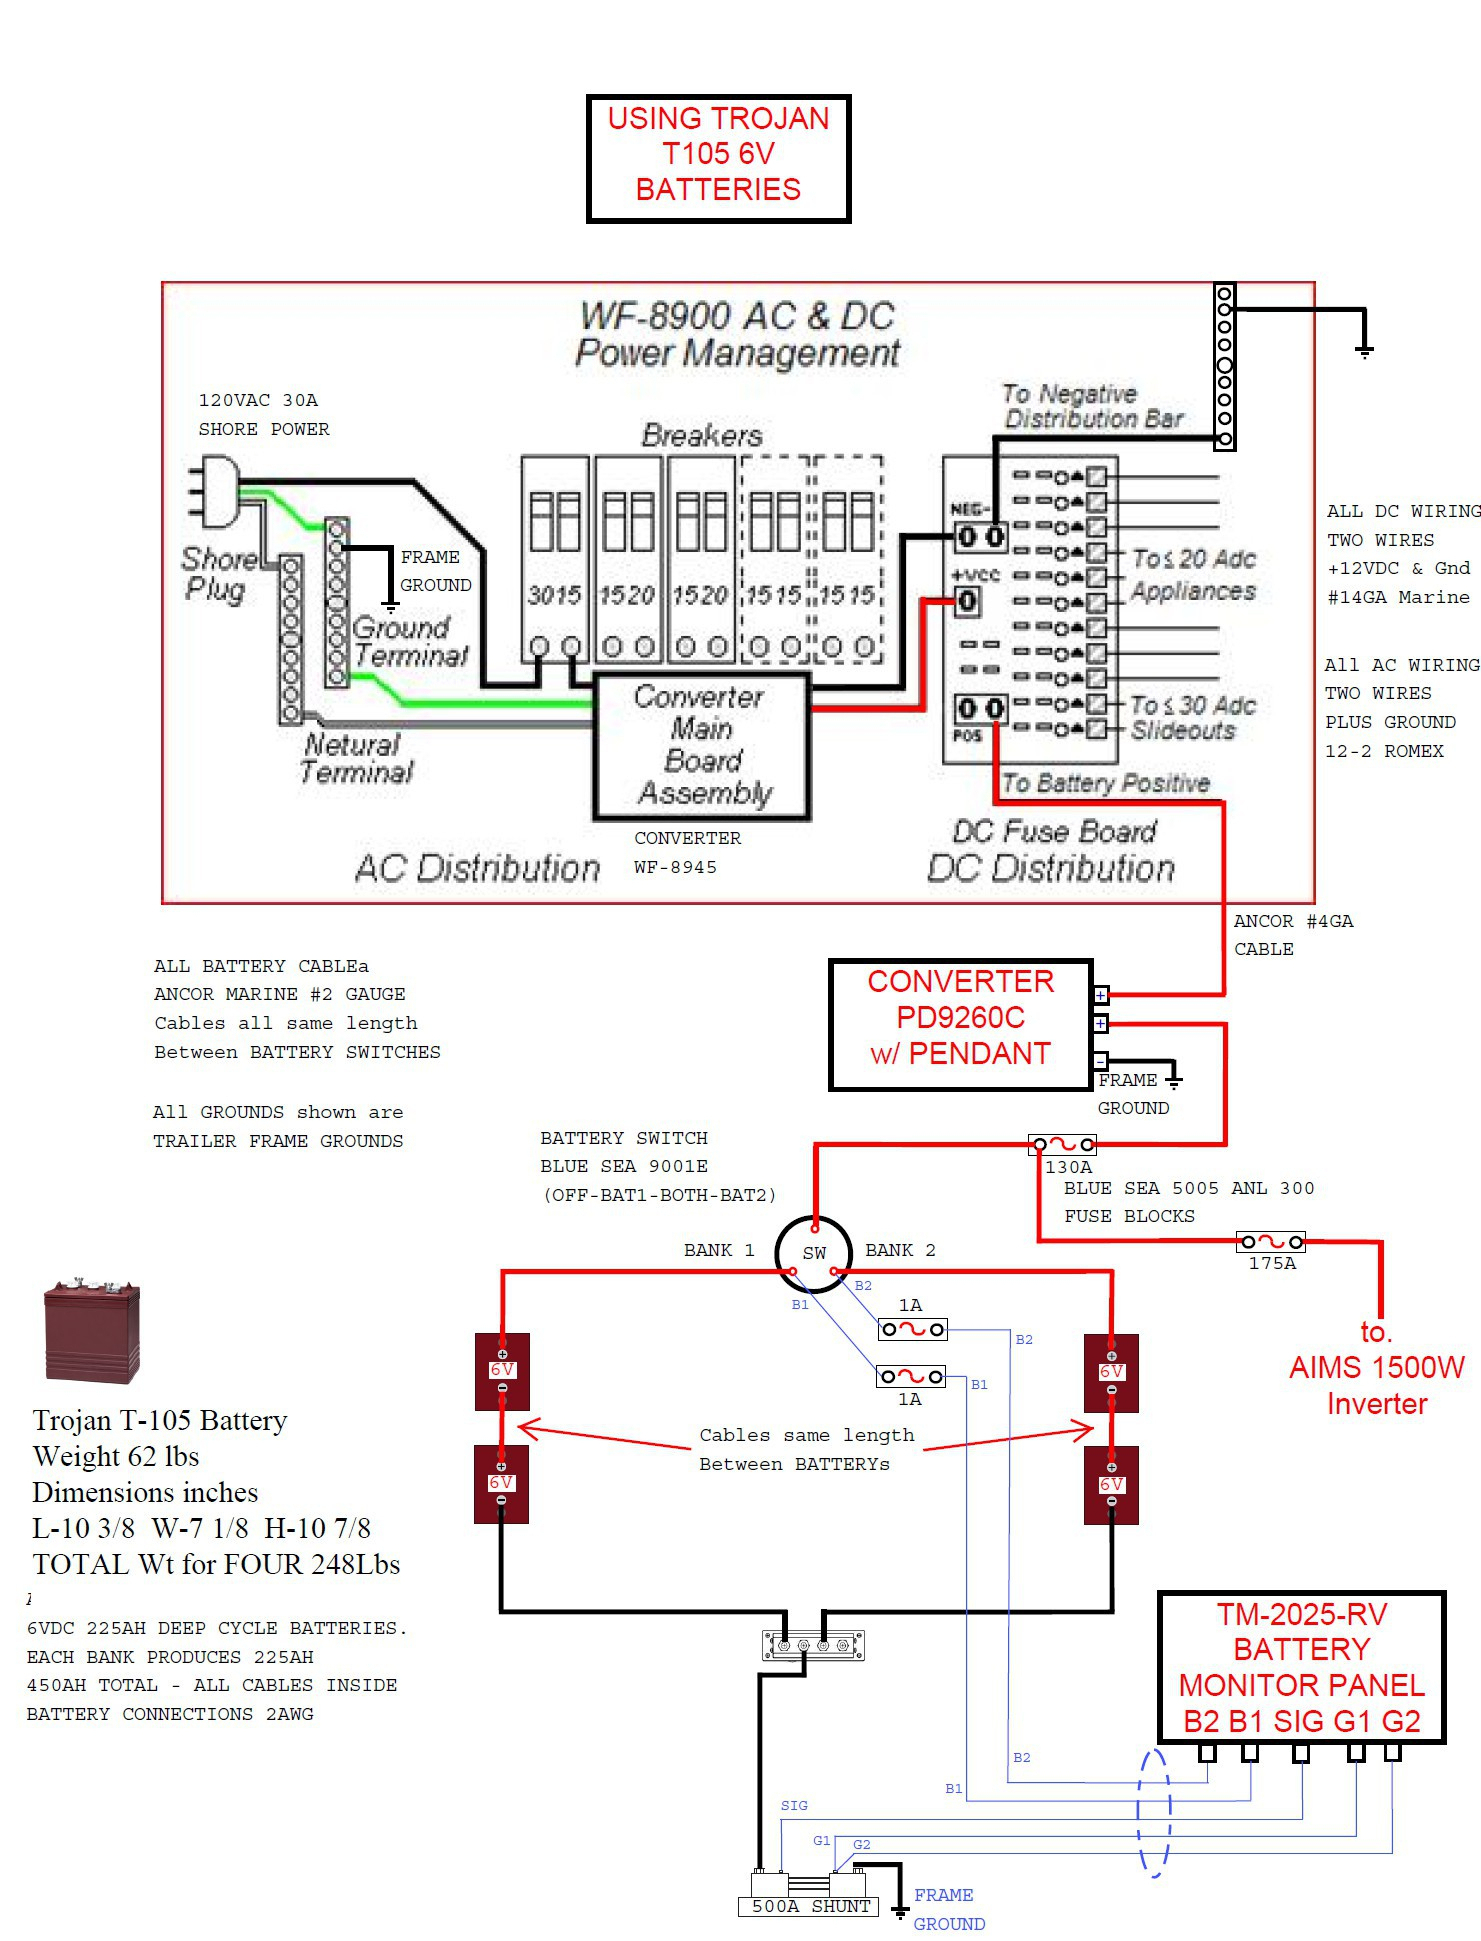 Rv Holding Tank Monitor Panel Wiring Diagram | Wiring Diagram - Rv Holding Tank Sensor Wiring Diagram